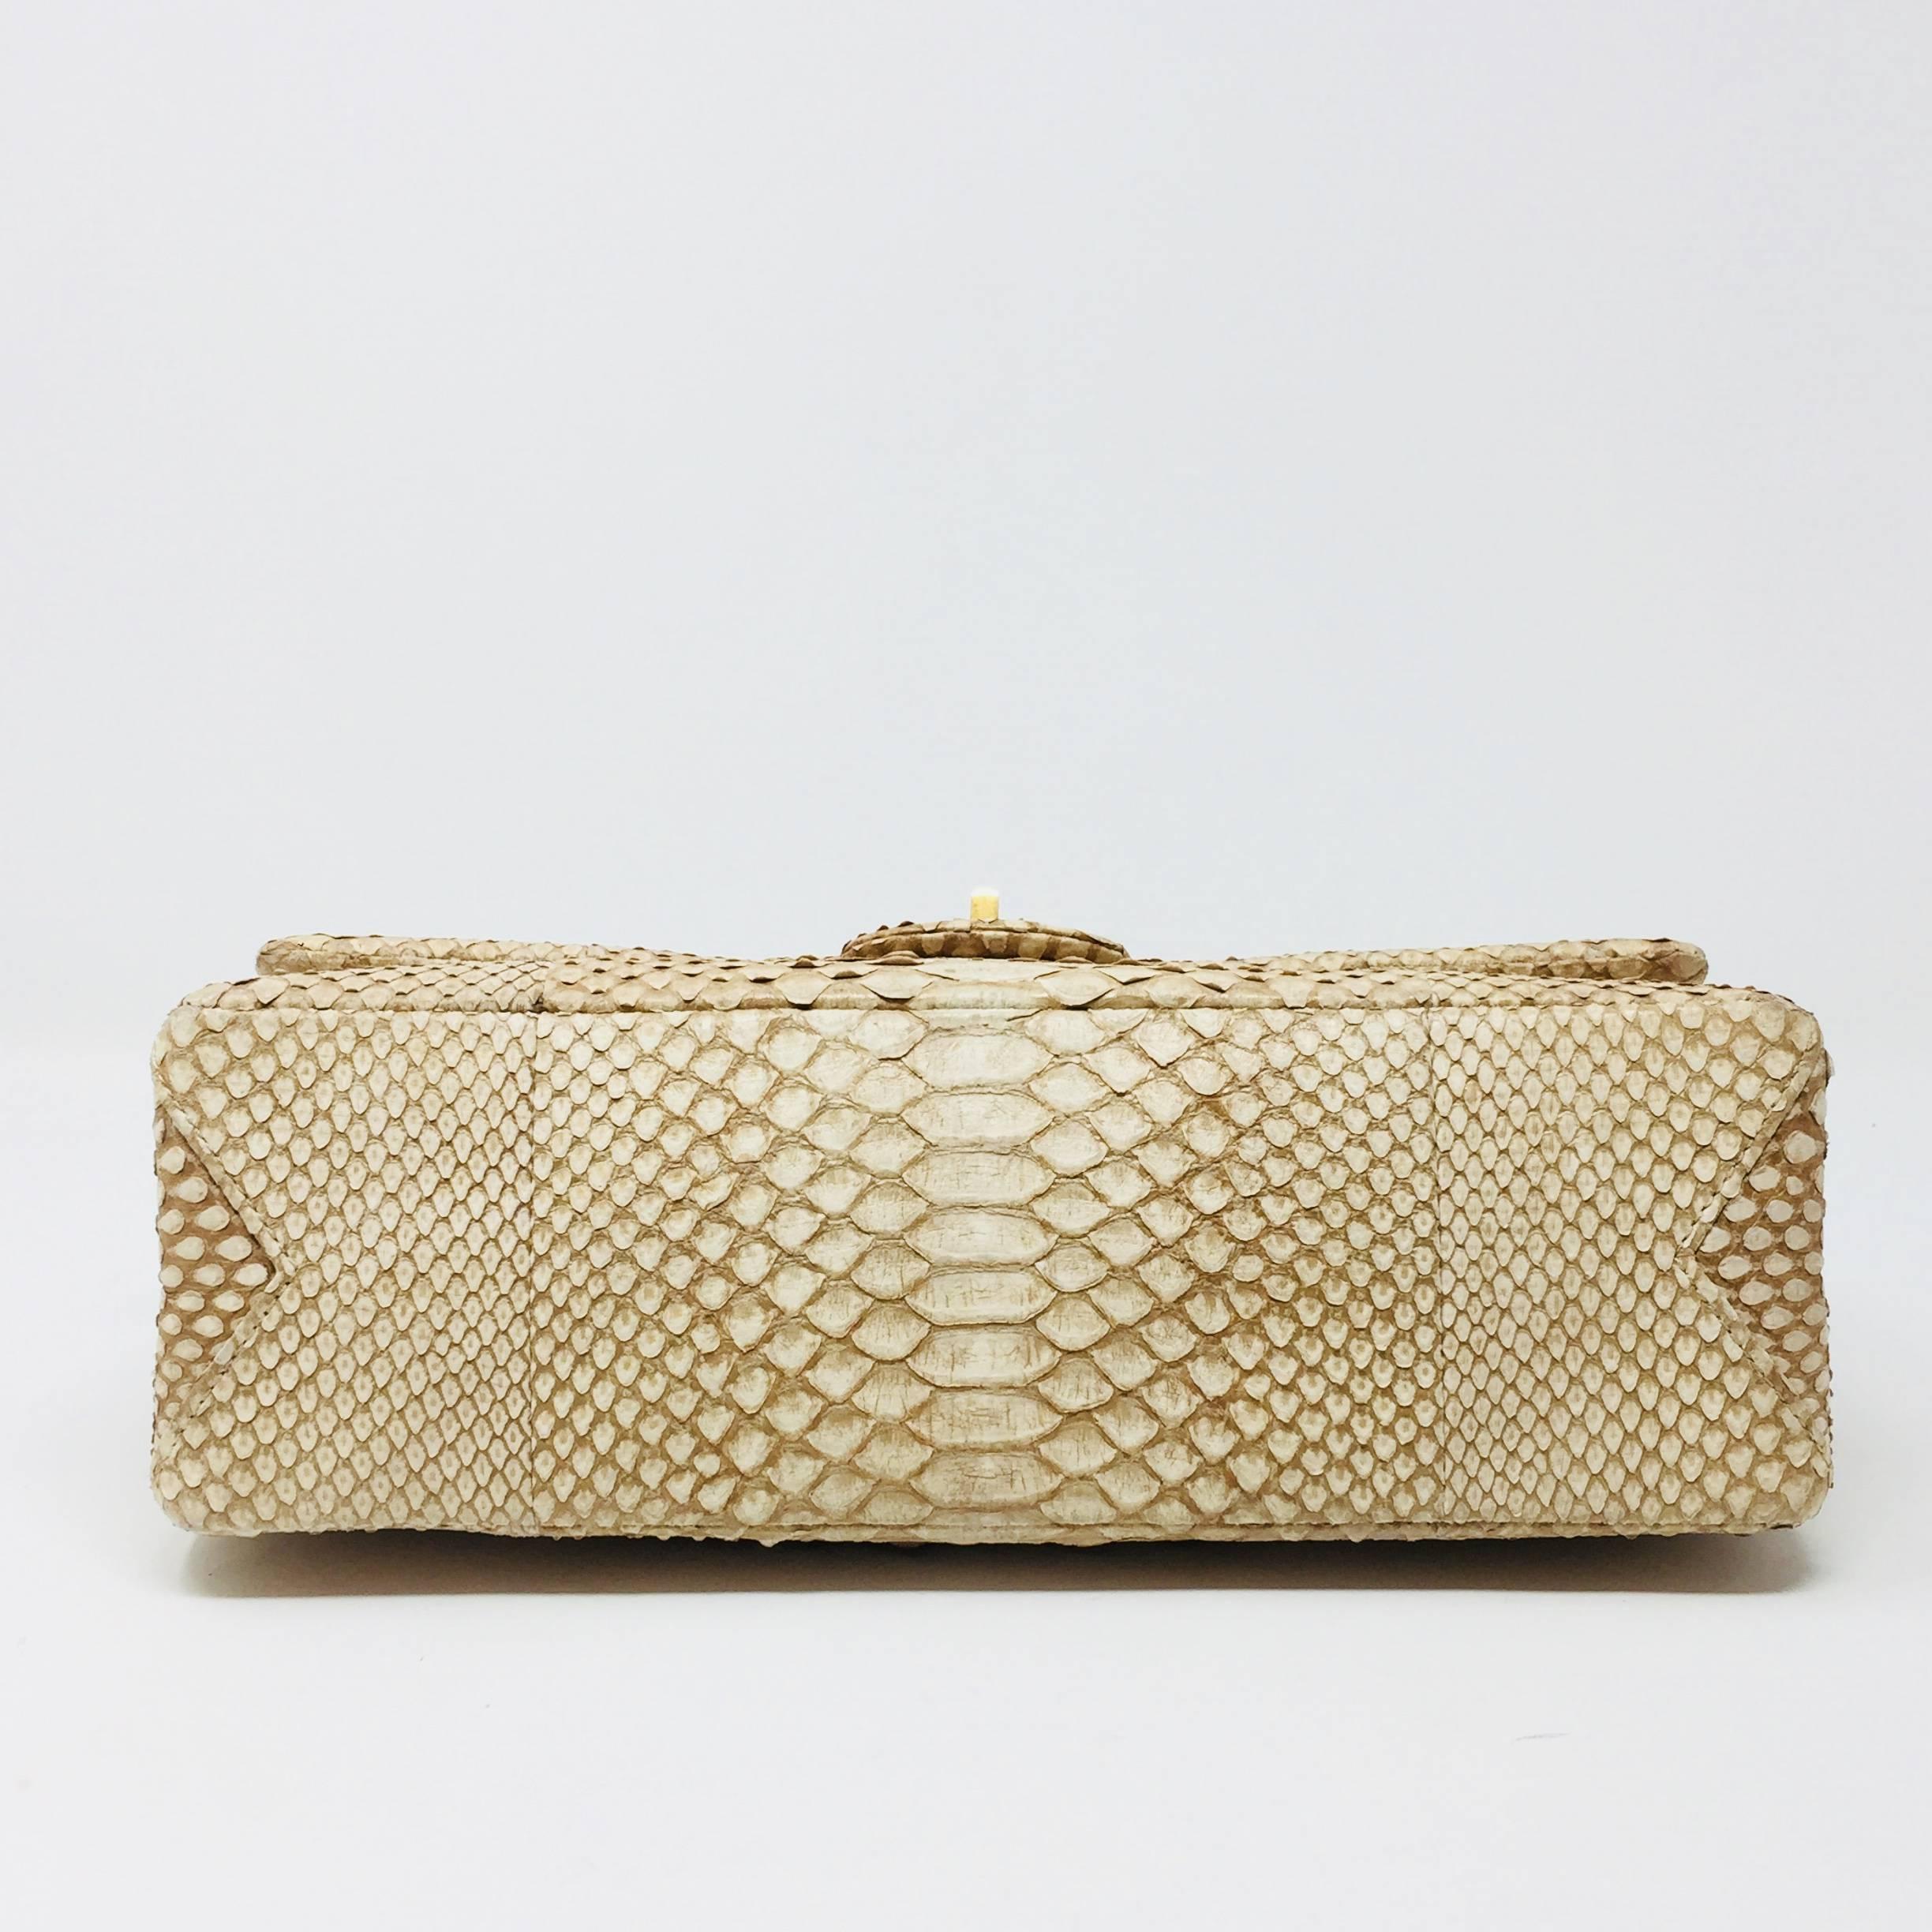 Chanel Reissue 2.55 Gold Nude Python Exotic Leather Shoulder Bag 2